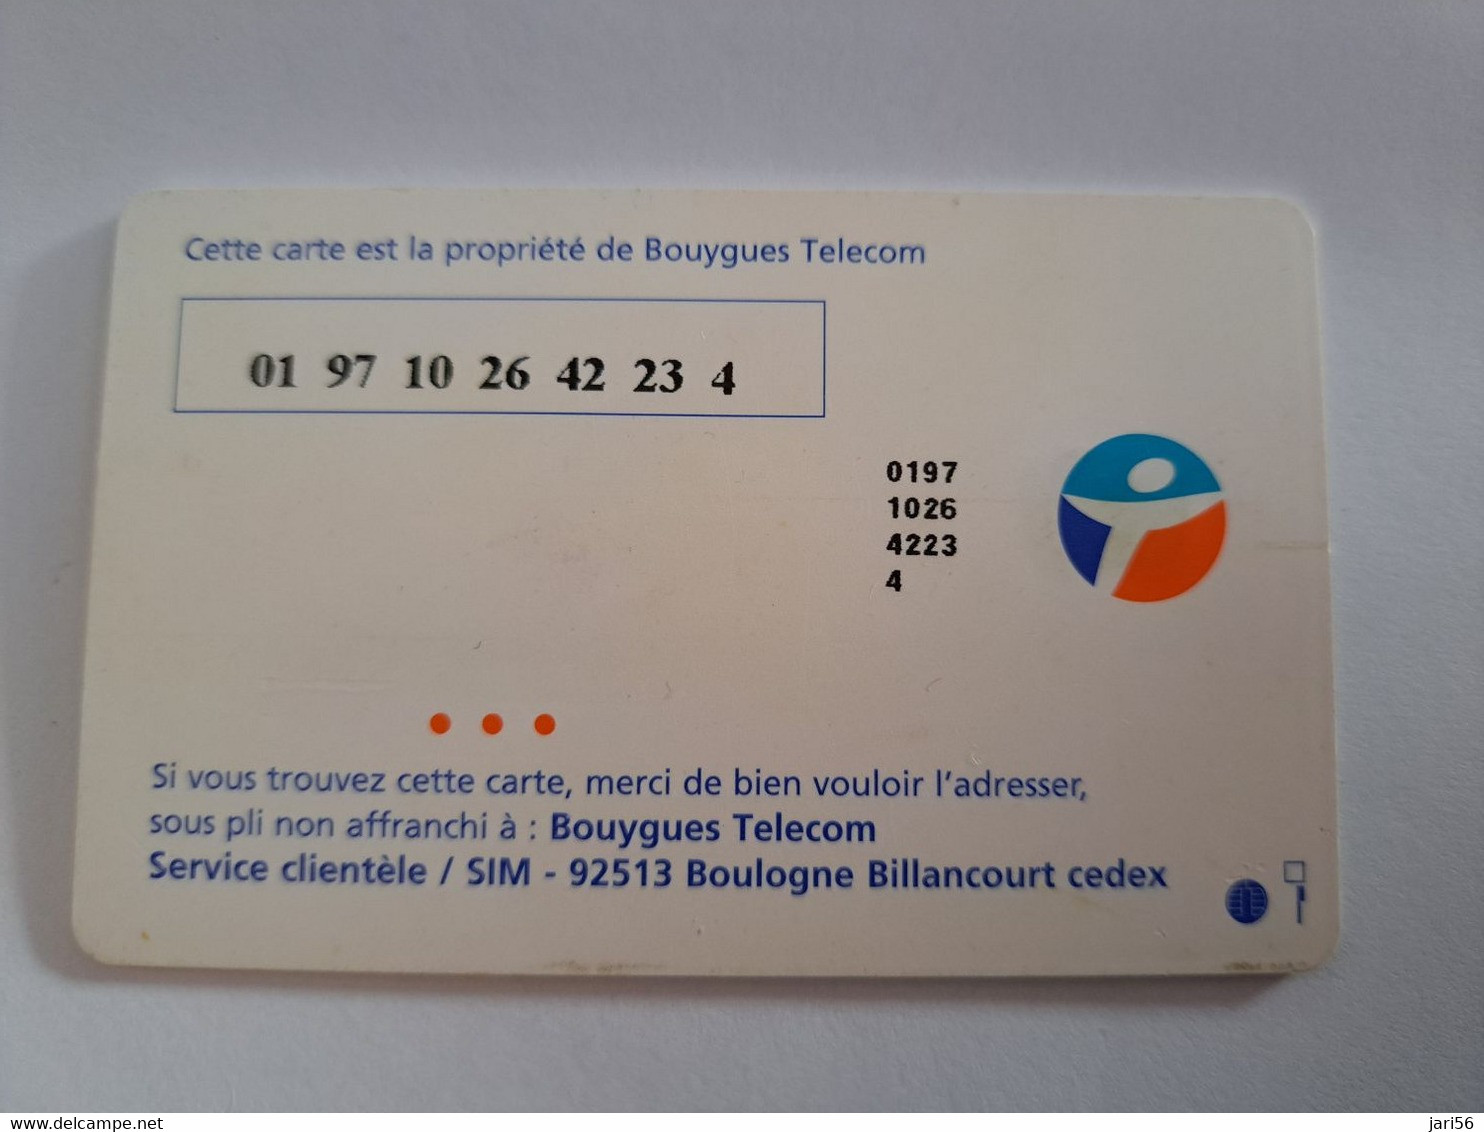 FRANCE/FRANKRIJK   SIM  GSM  BOUYGUES TELECOM   MOBILE   WITH CHIP     MINT  ** 10603 ** - Mobicartes (GSM/SIM)